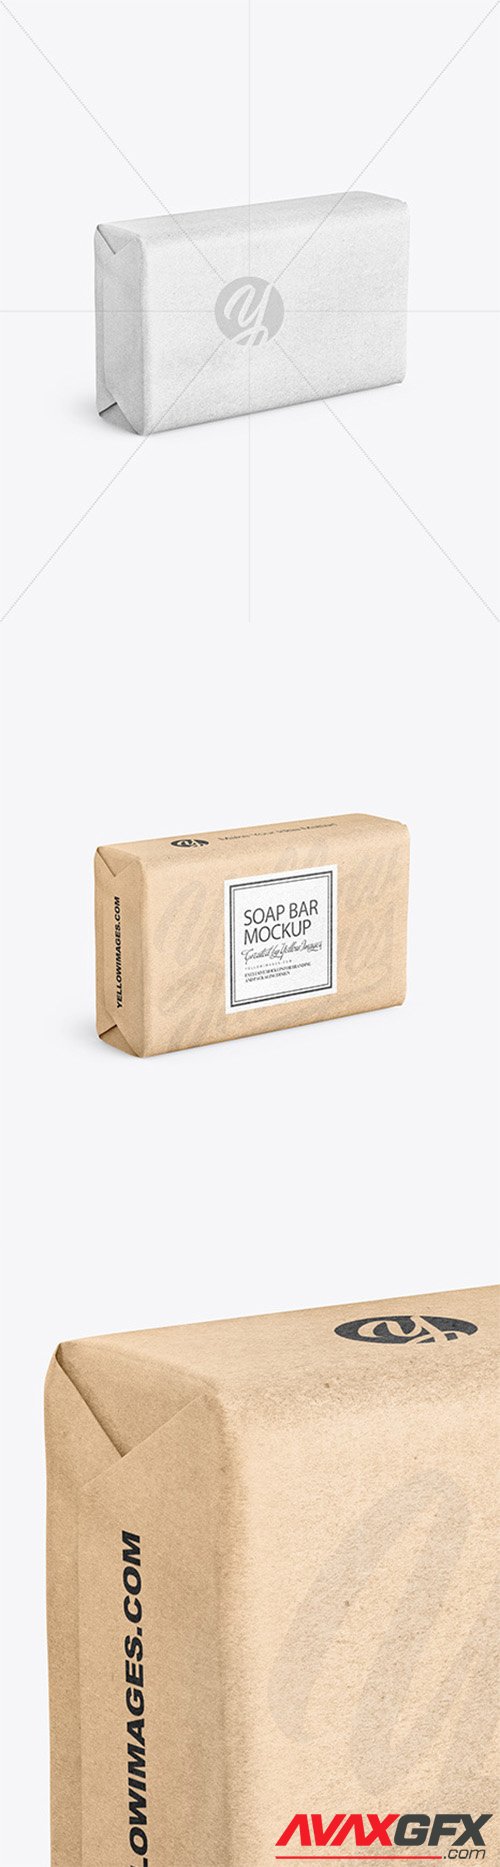 Kraft Paper Soap Bar Package Mockup 80773